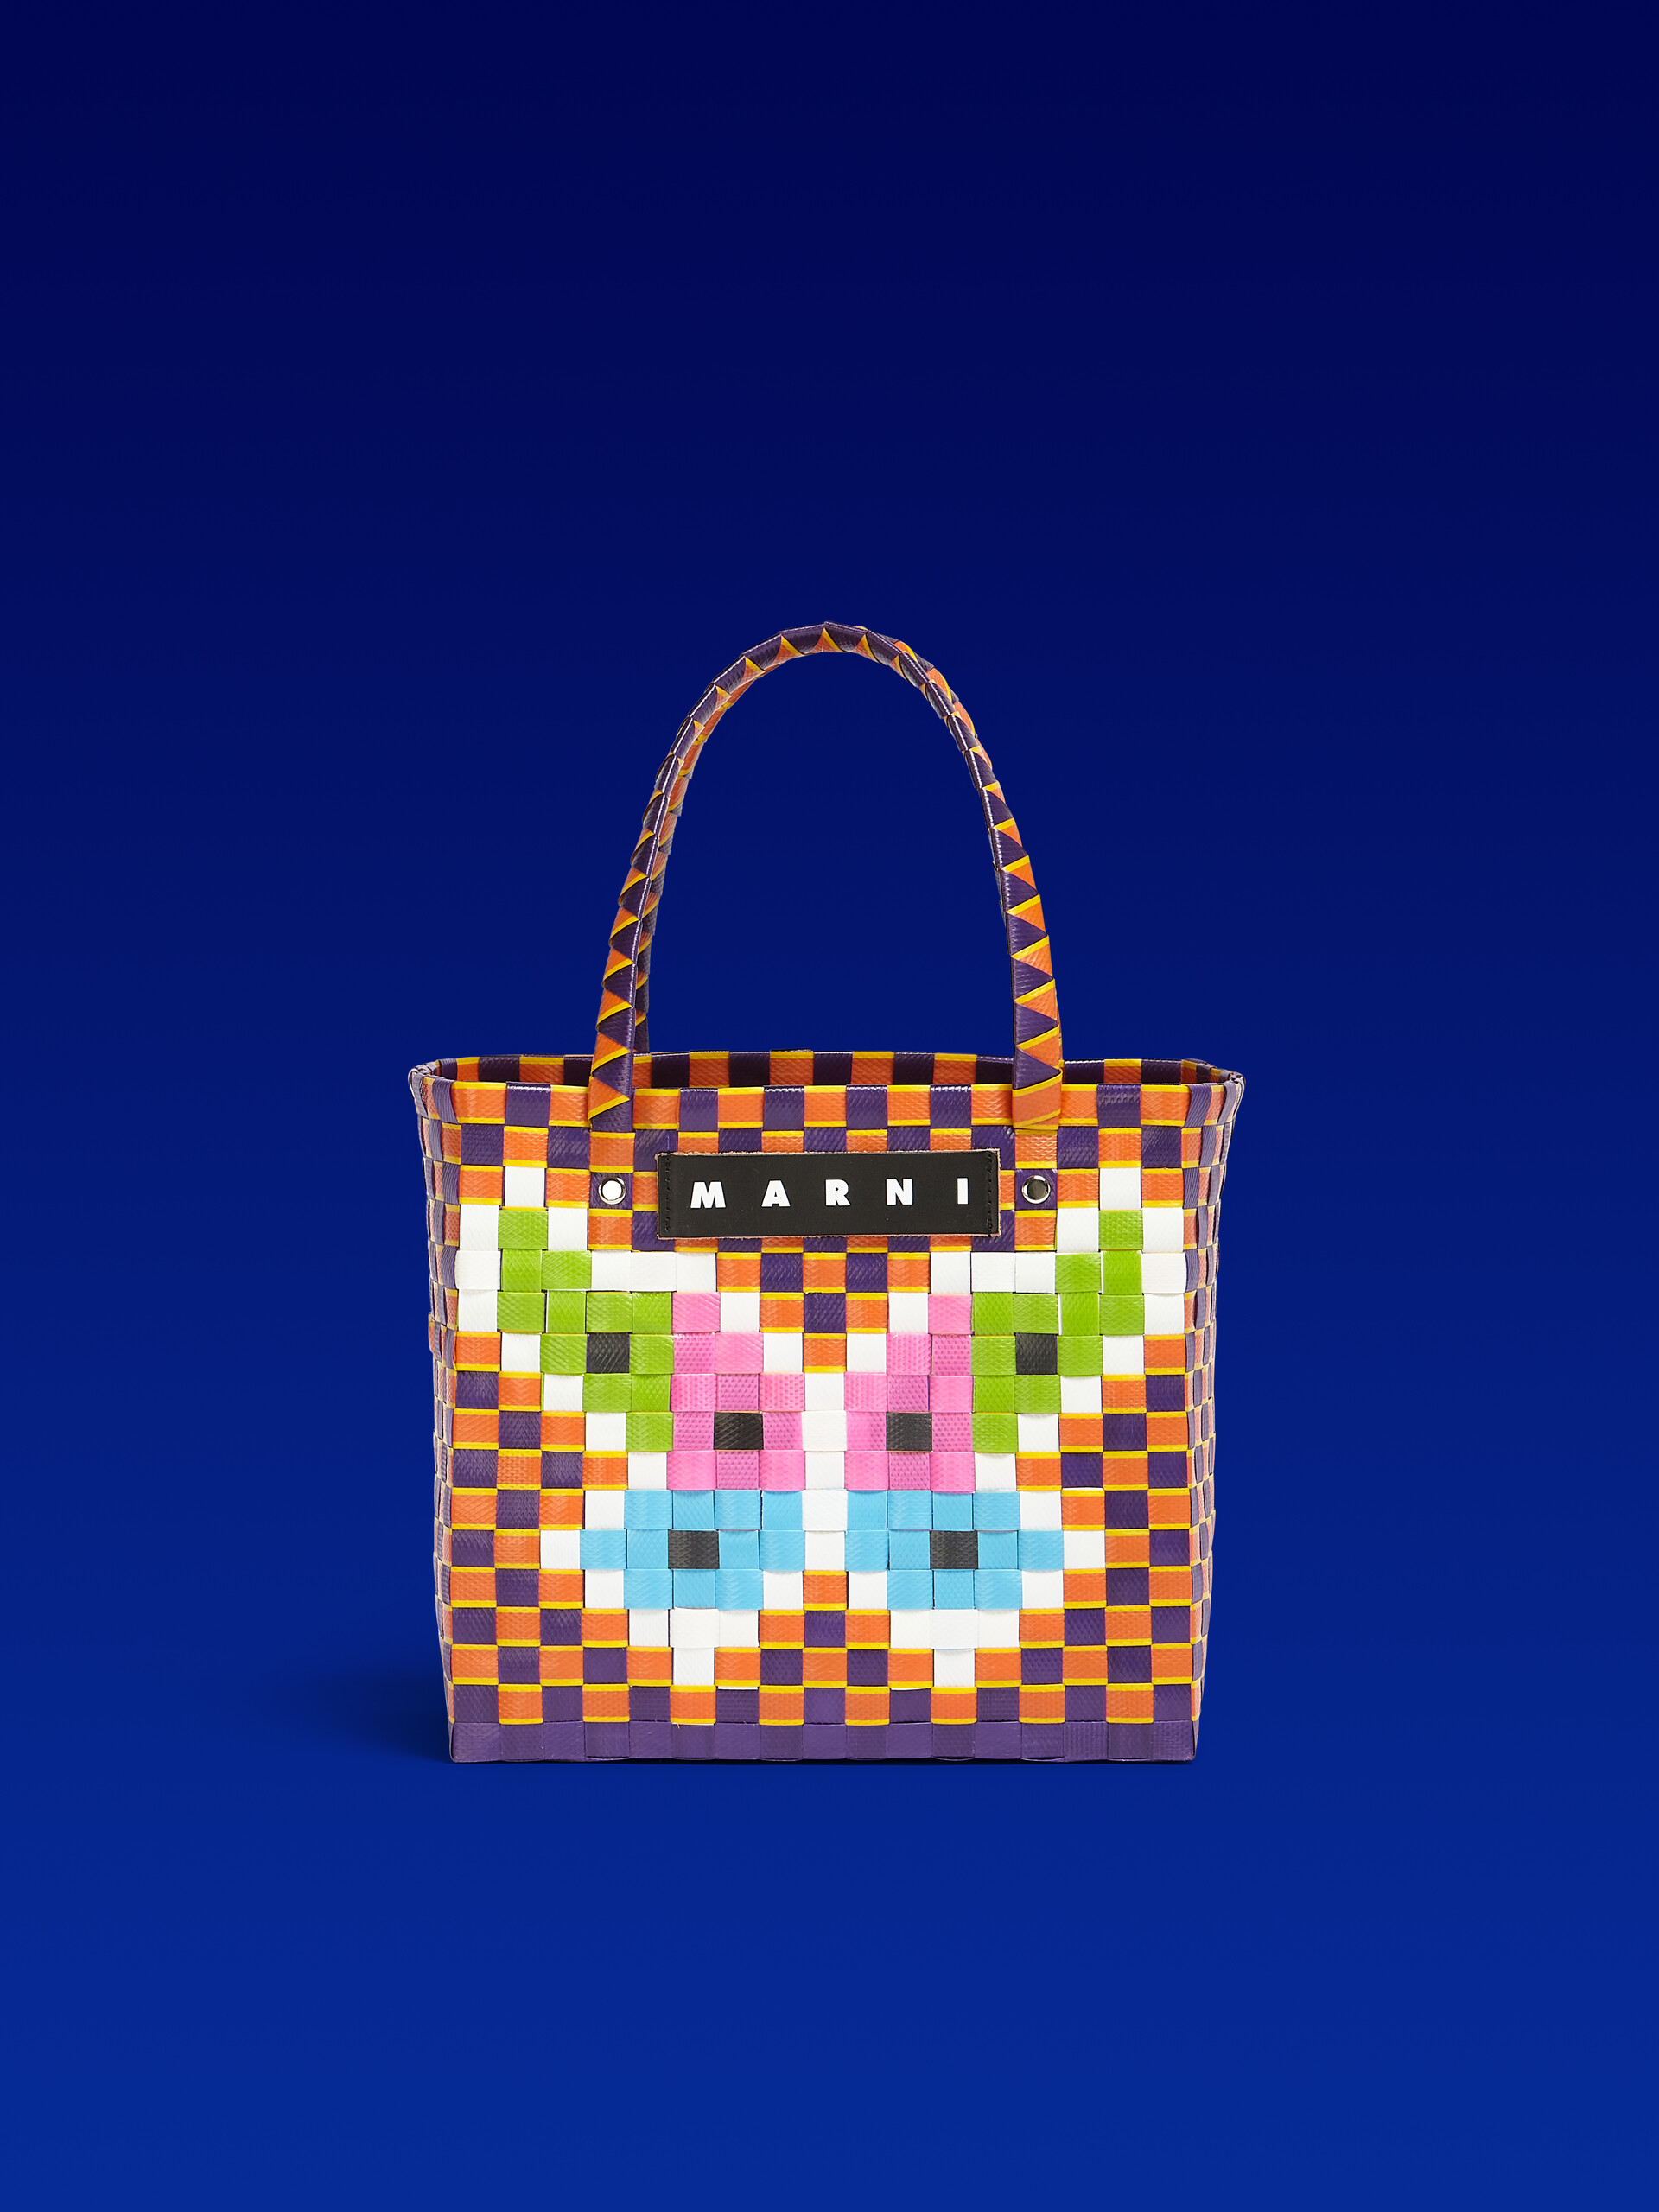 MARNI MARKET FLOWER BASKET bag in orange butterfly motif - Bags - Image 1